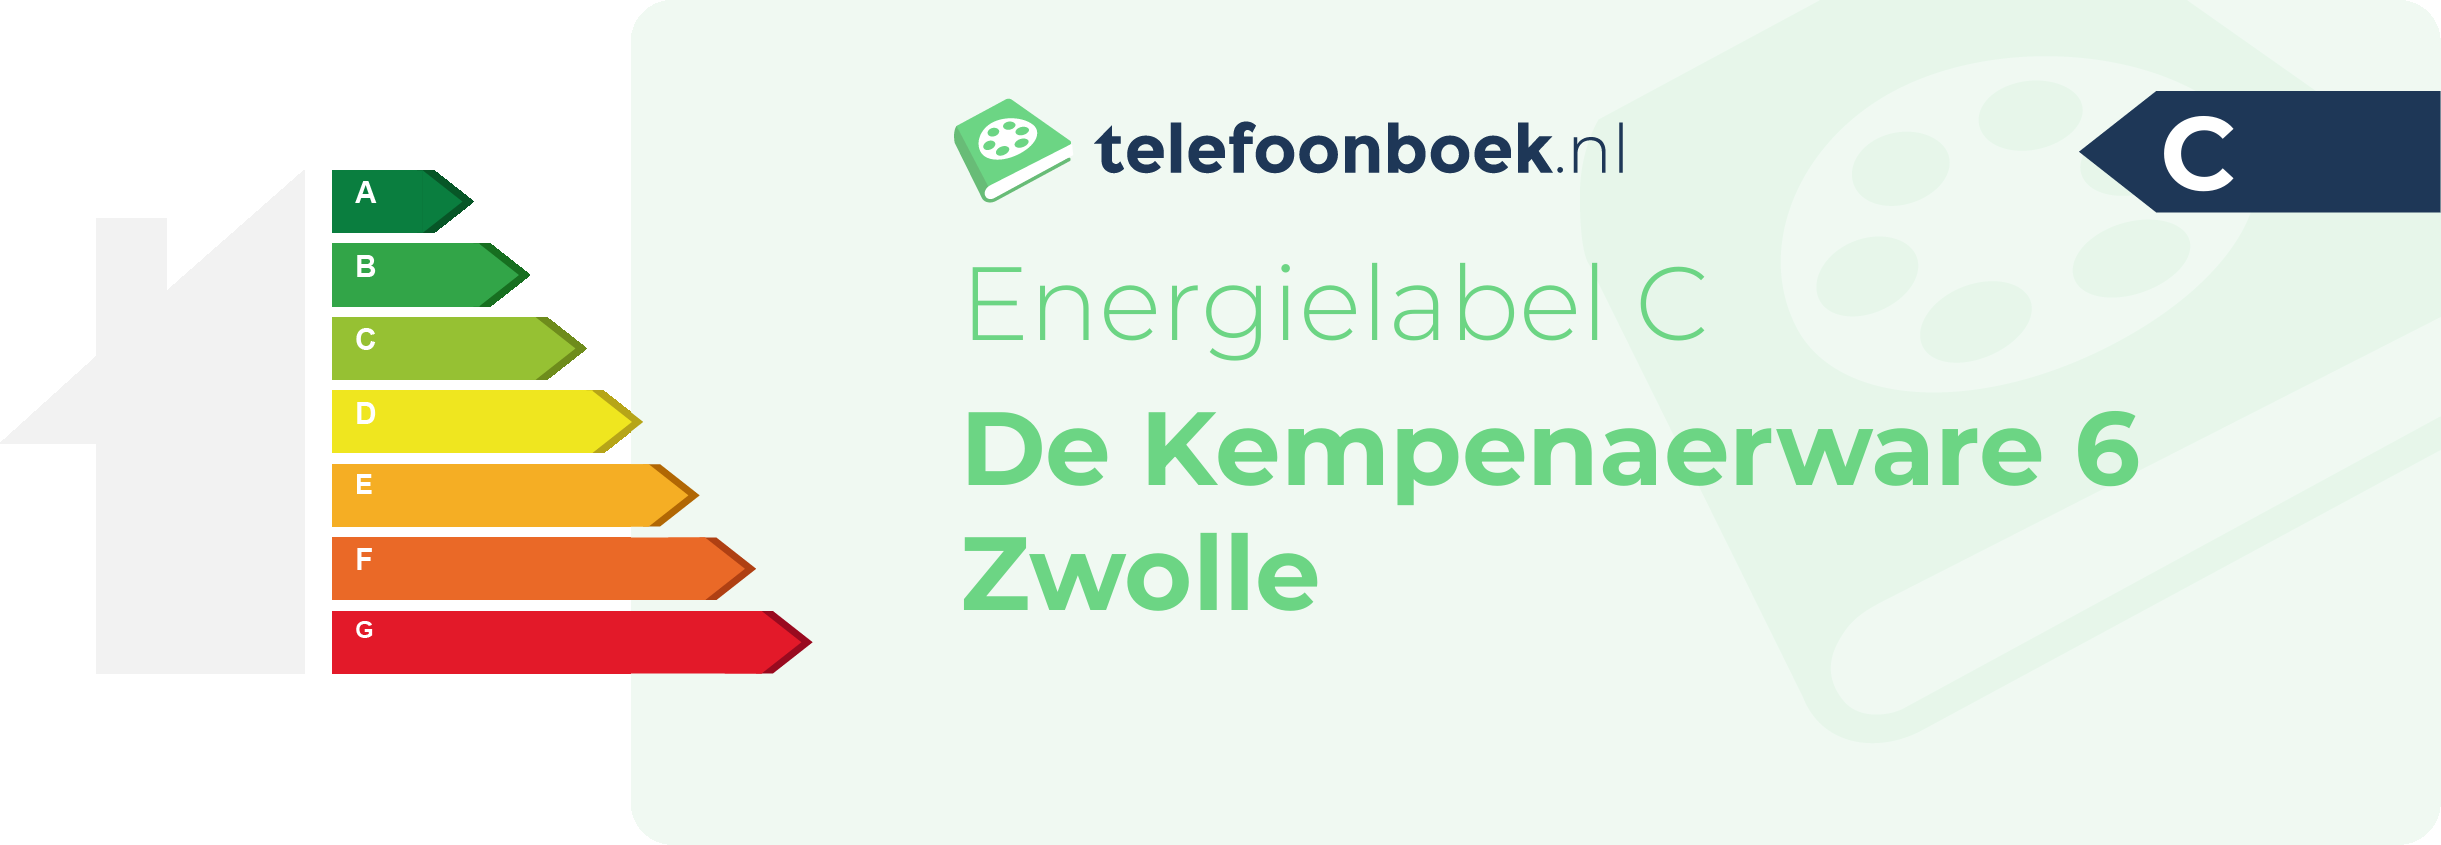 Energielabel De Kempenaerware 6 Zwolle